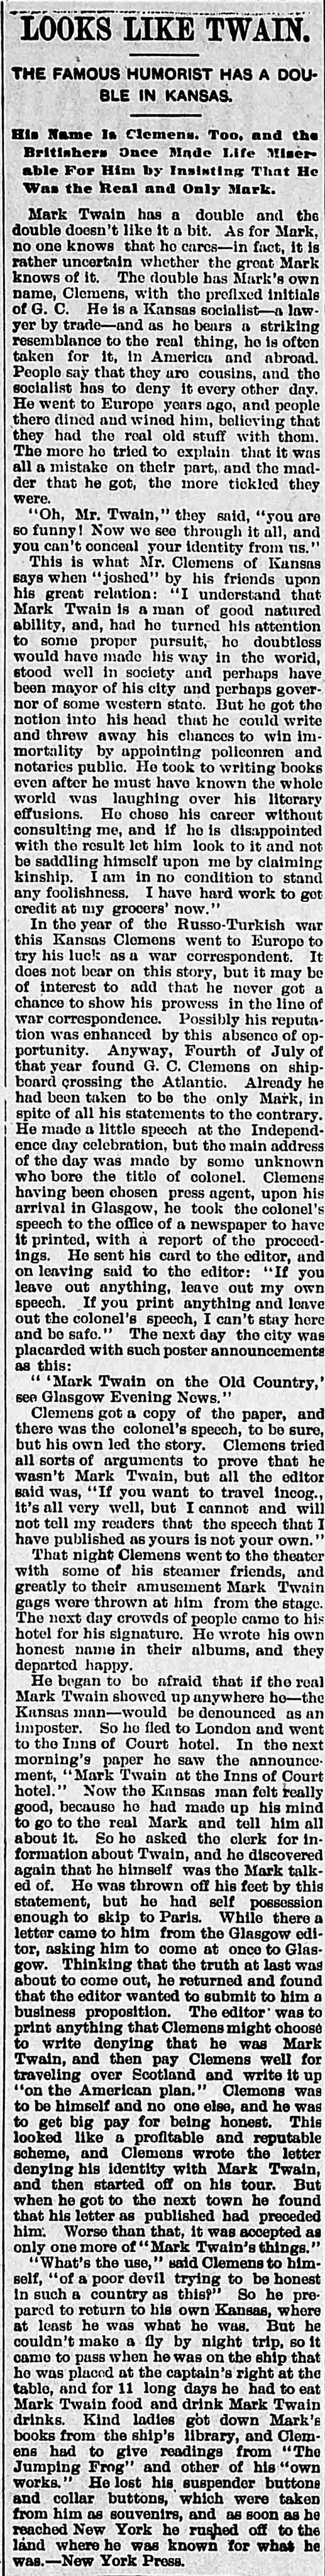 Article tells story of Mark Twain look-alike in Kansas - 